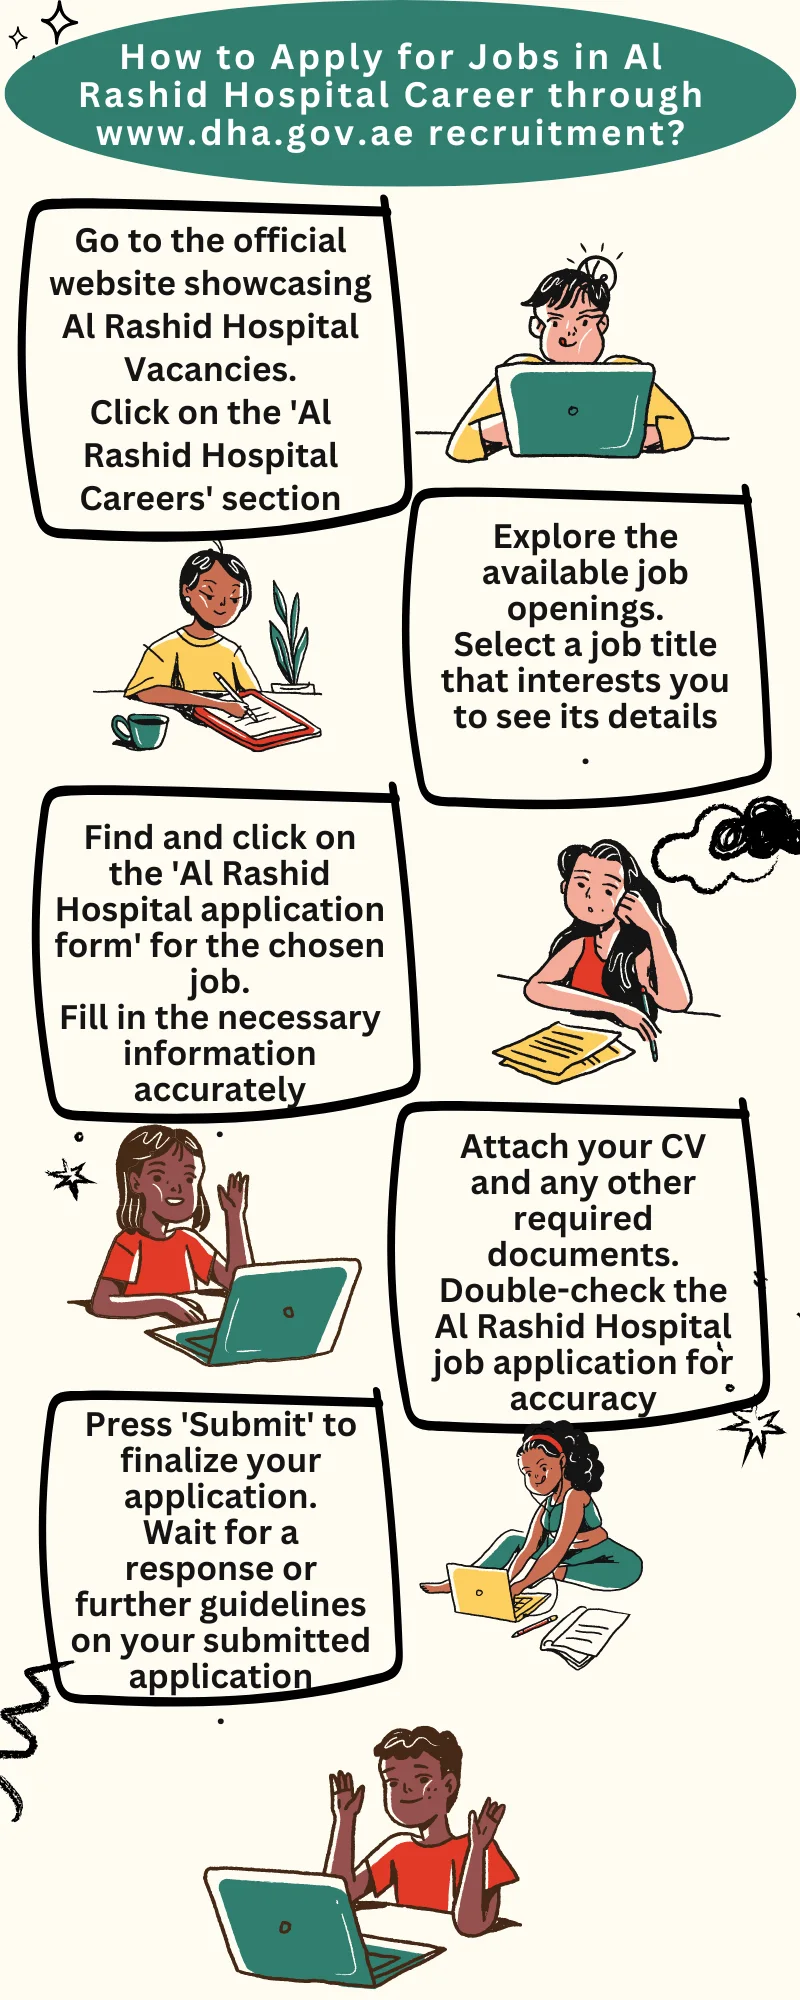 How to Apply for Jobs in Al Rashid Hospital Career through www.dha.gov.ae recruitment?